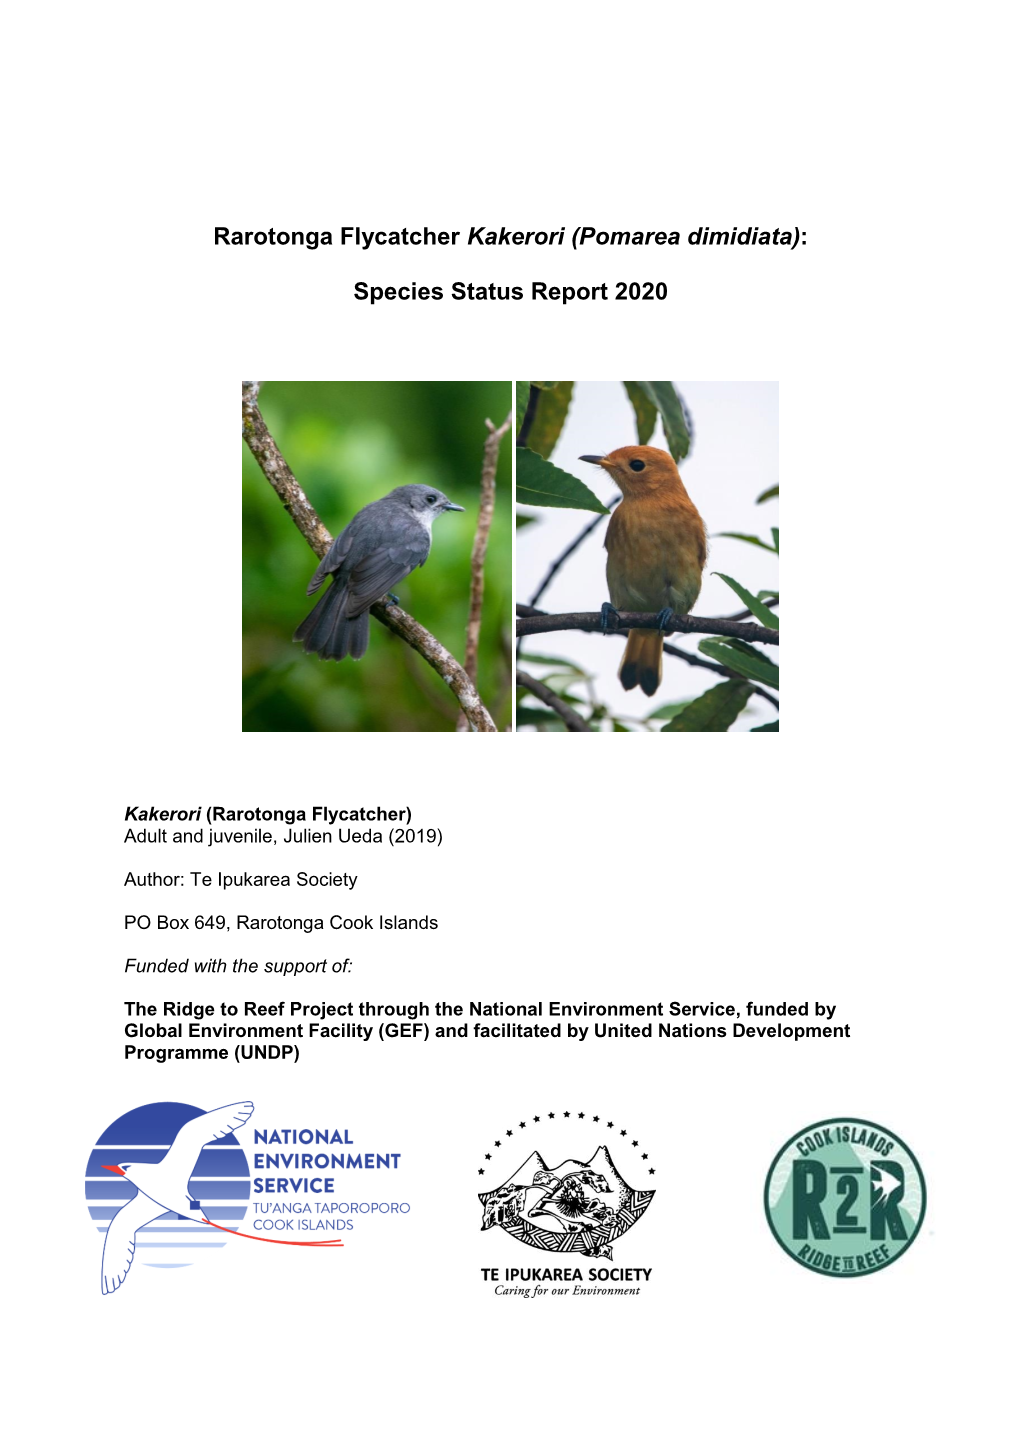 Rarotonga Flycatcher Kakerori (Pomarea Dimidiata): Species